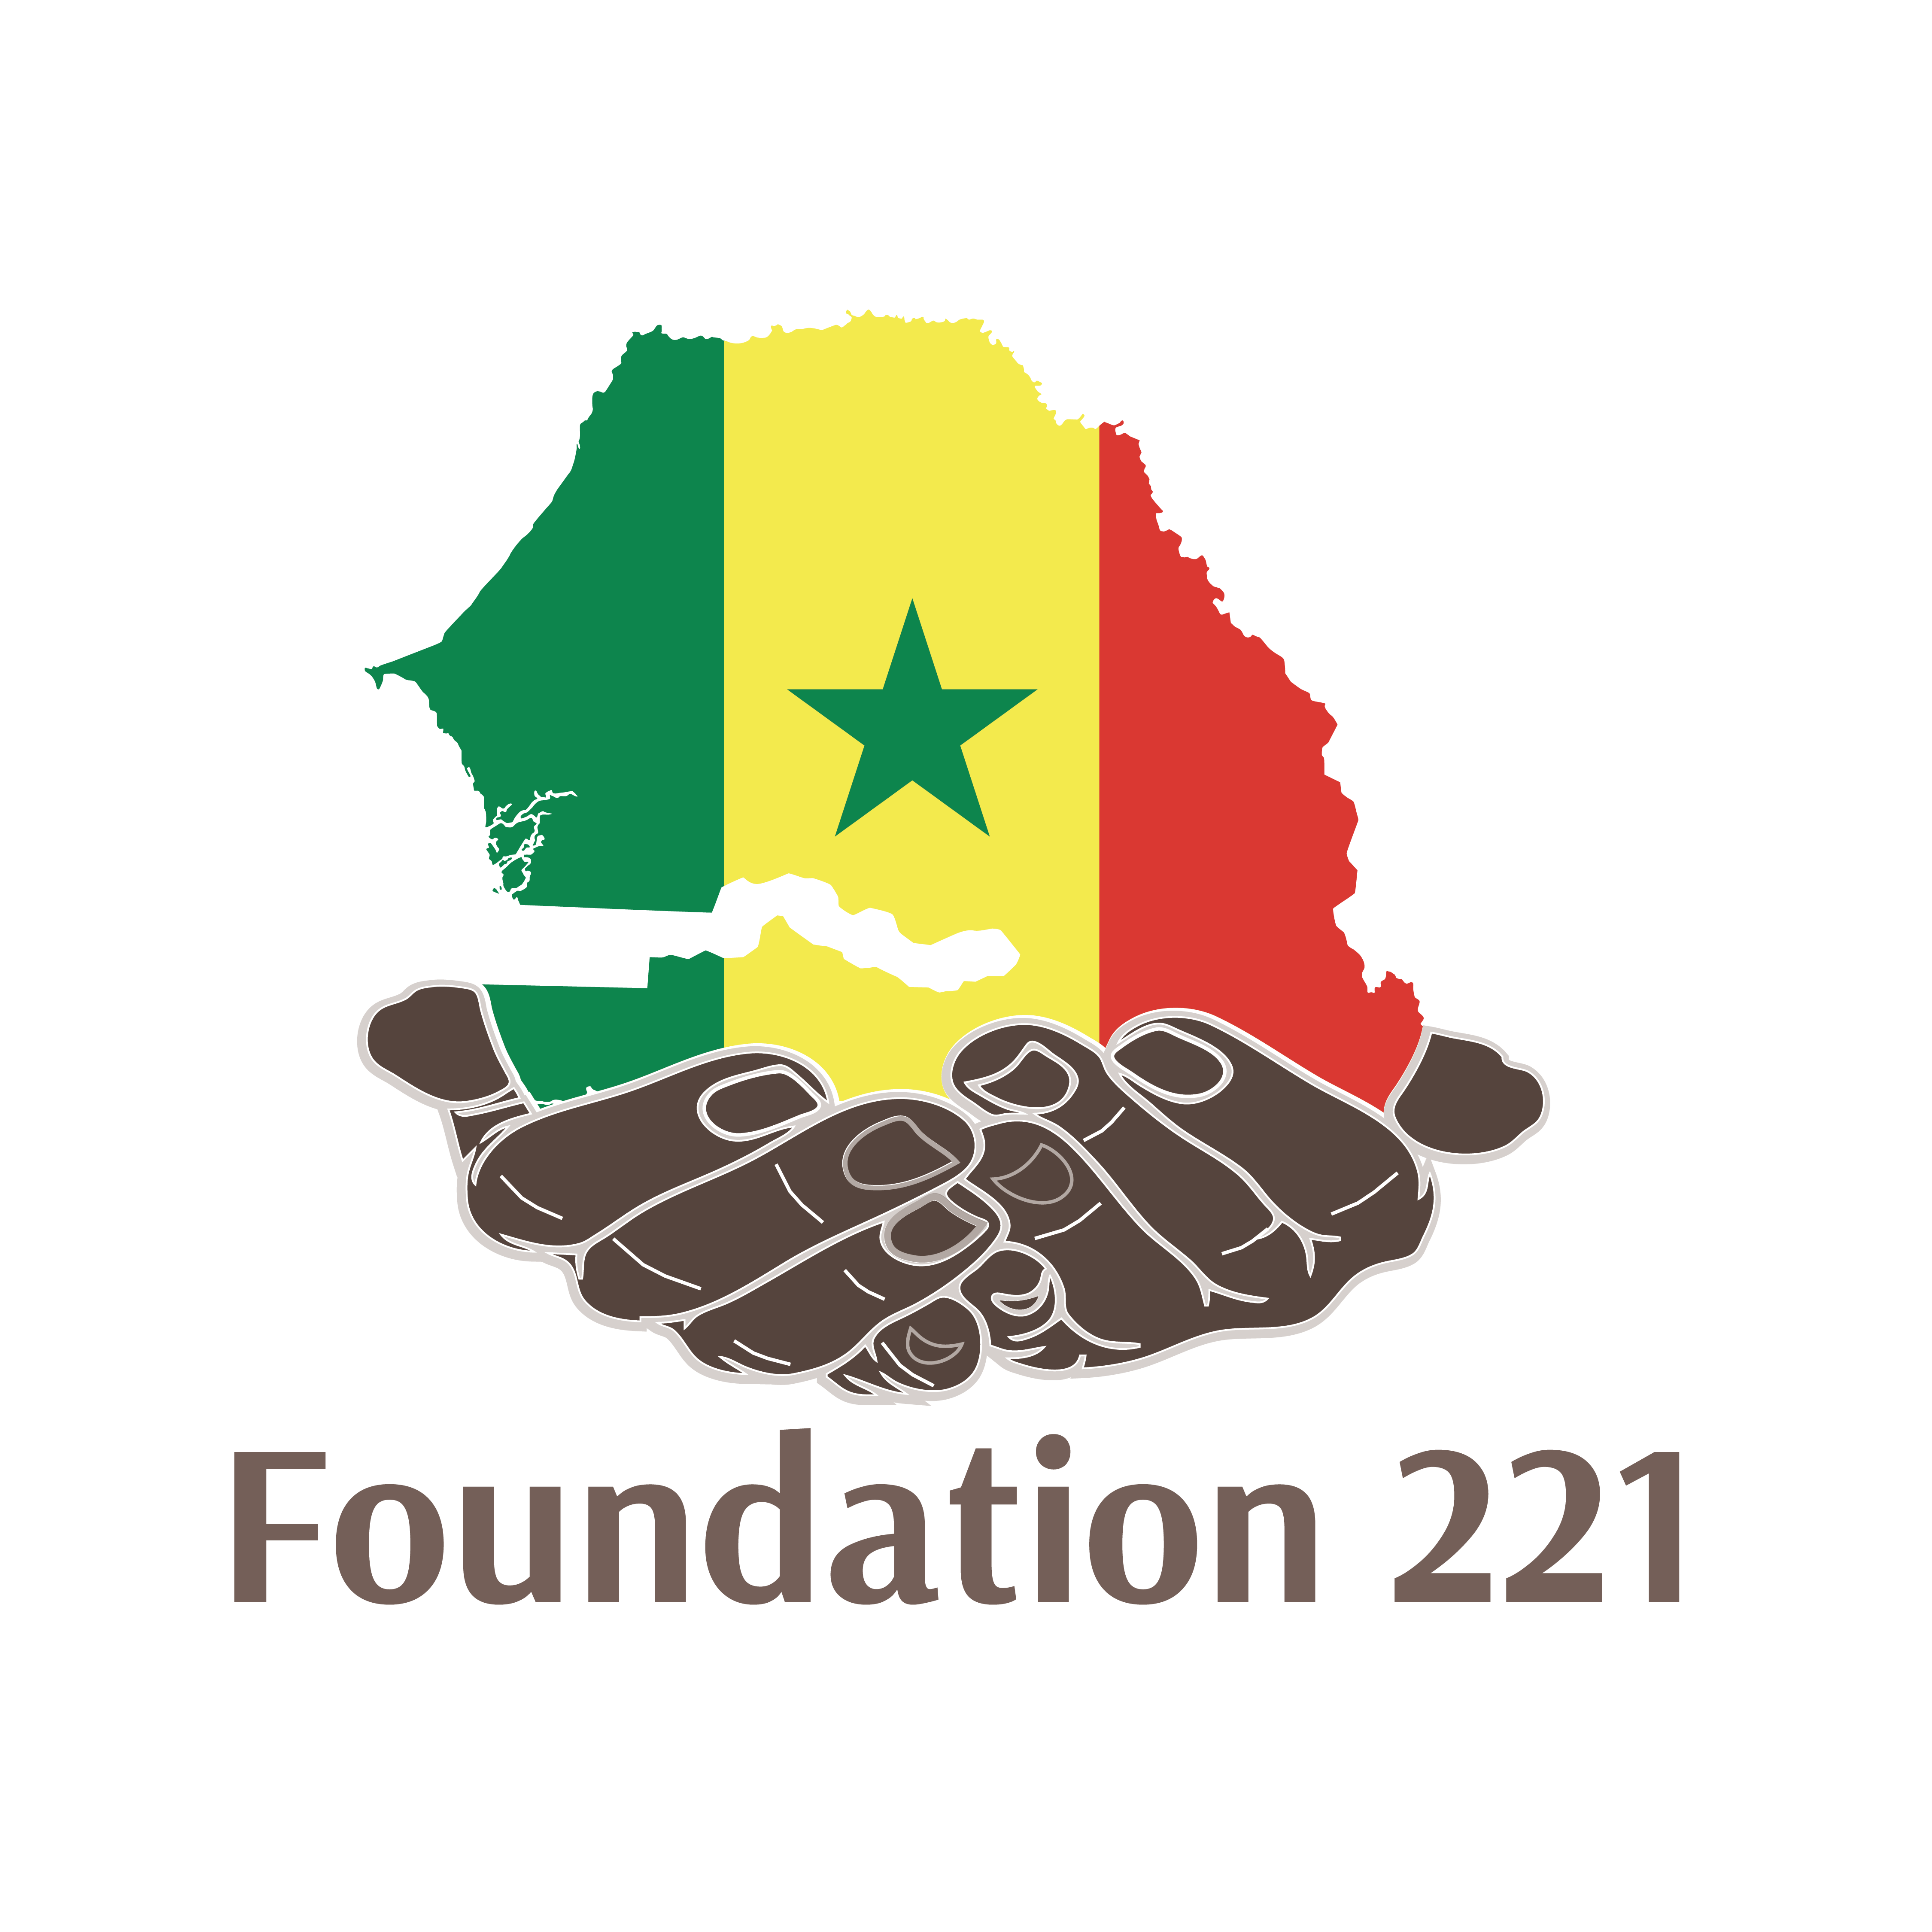 Foundation 221